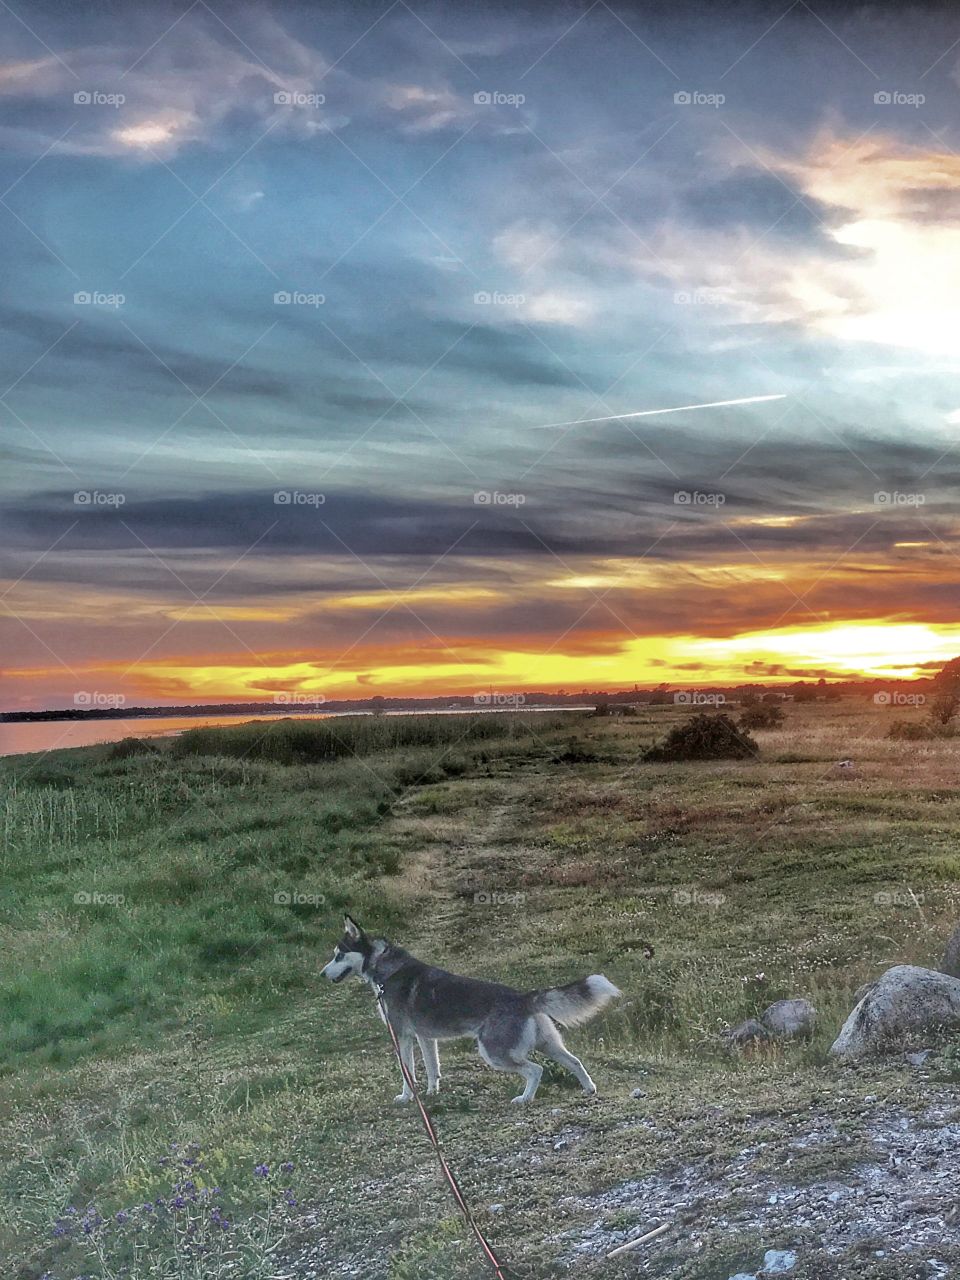 Siberian Huskey at sunset